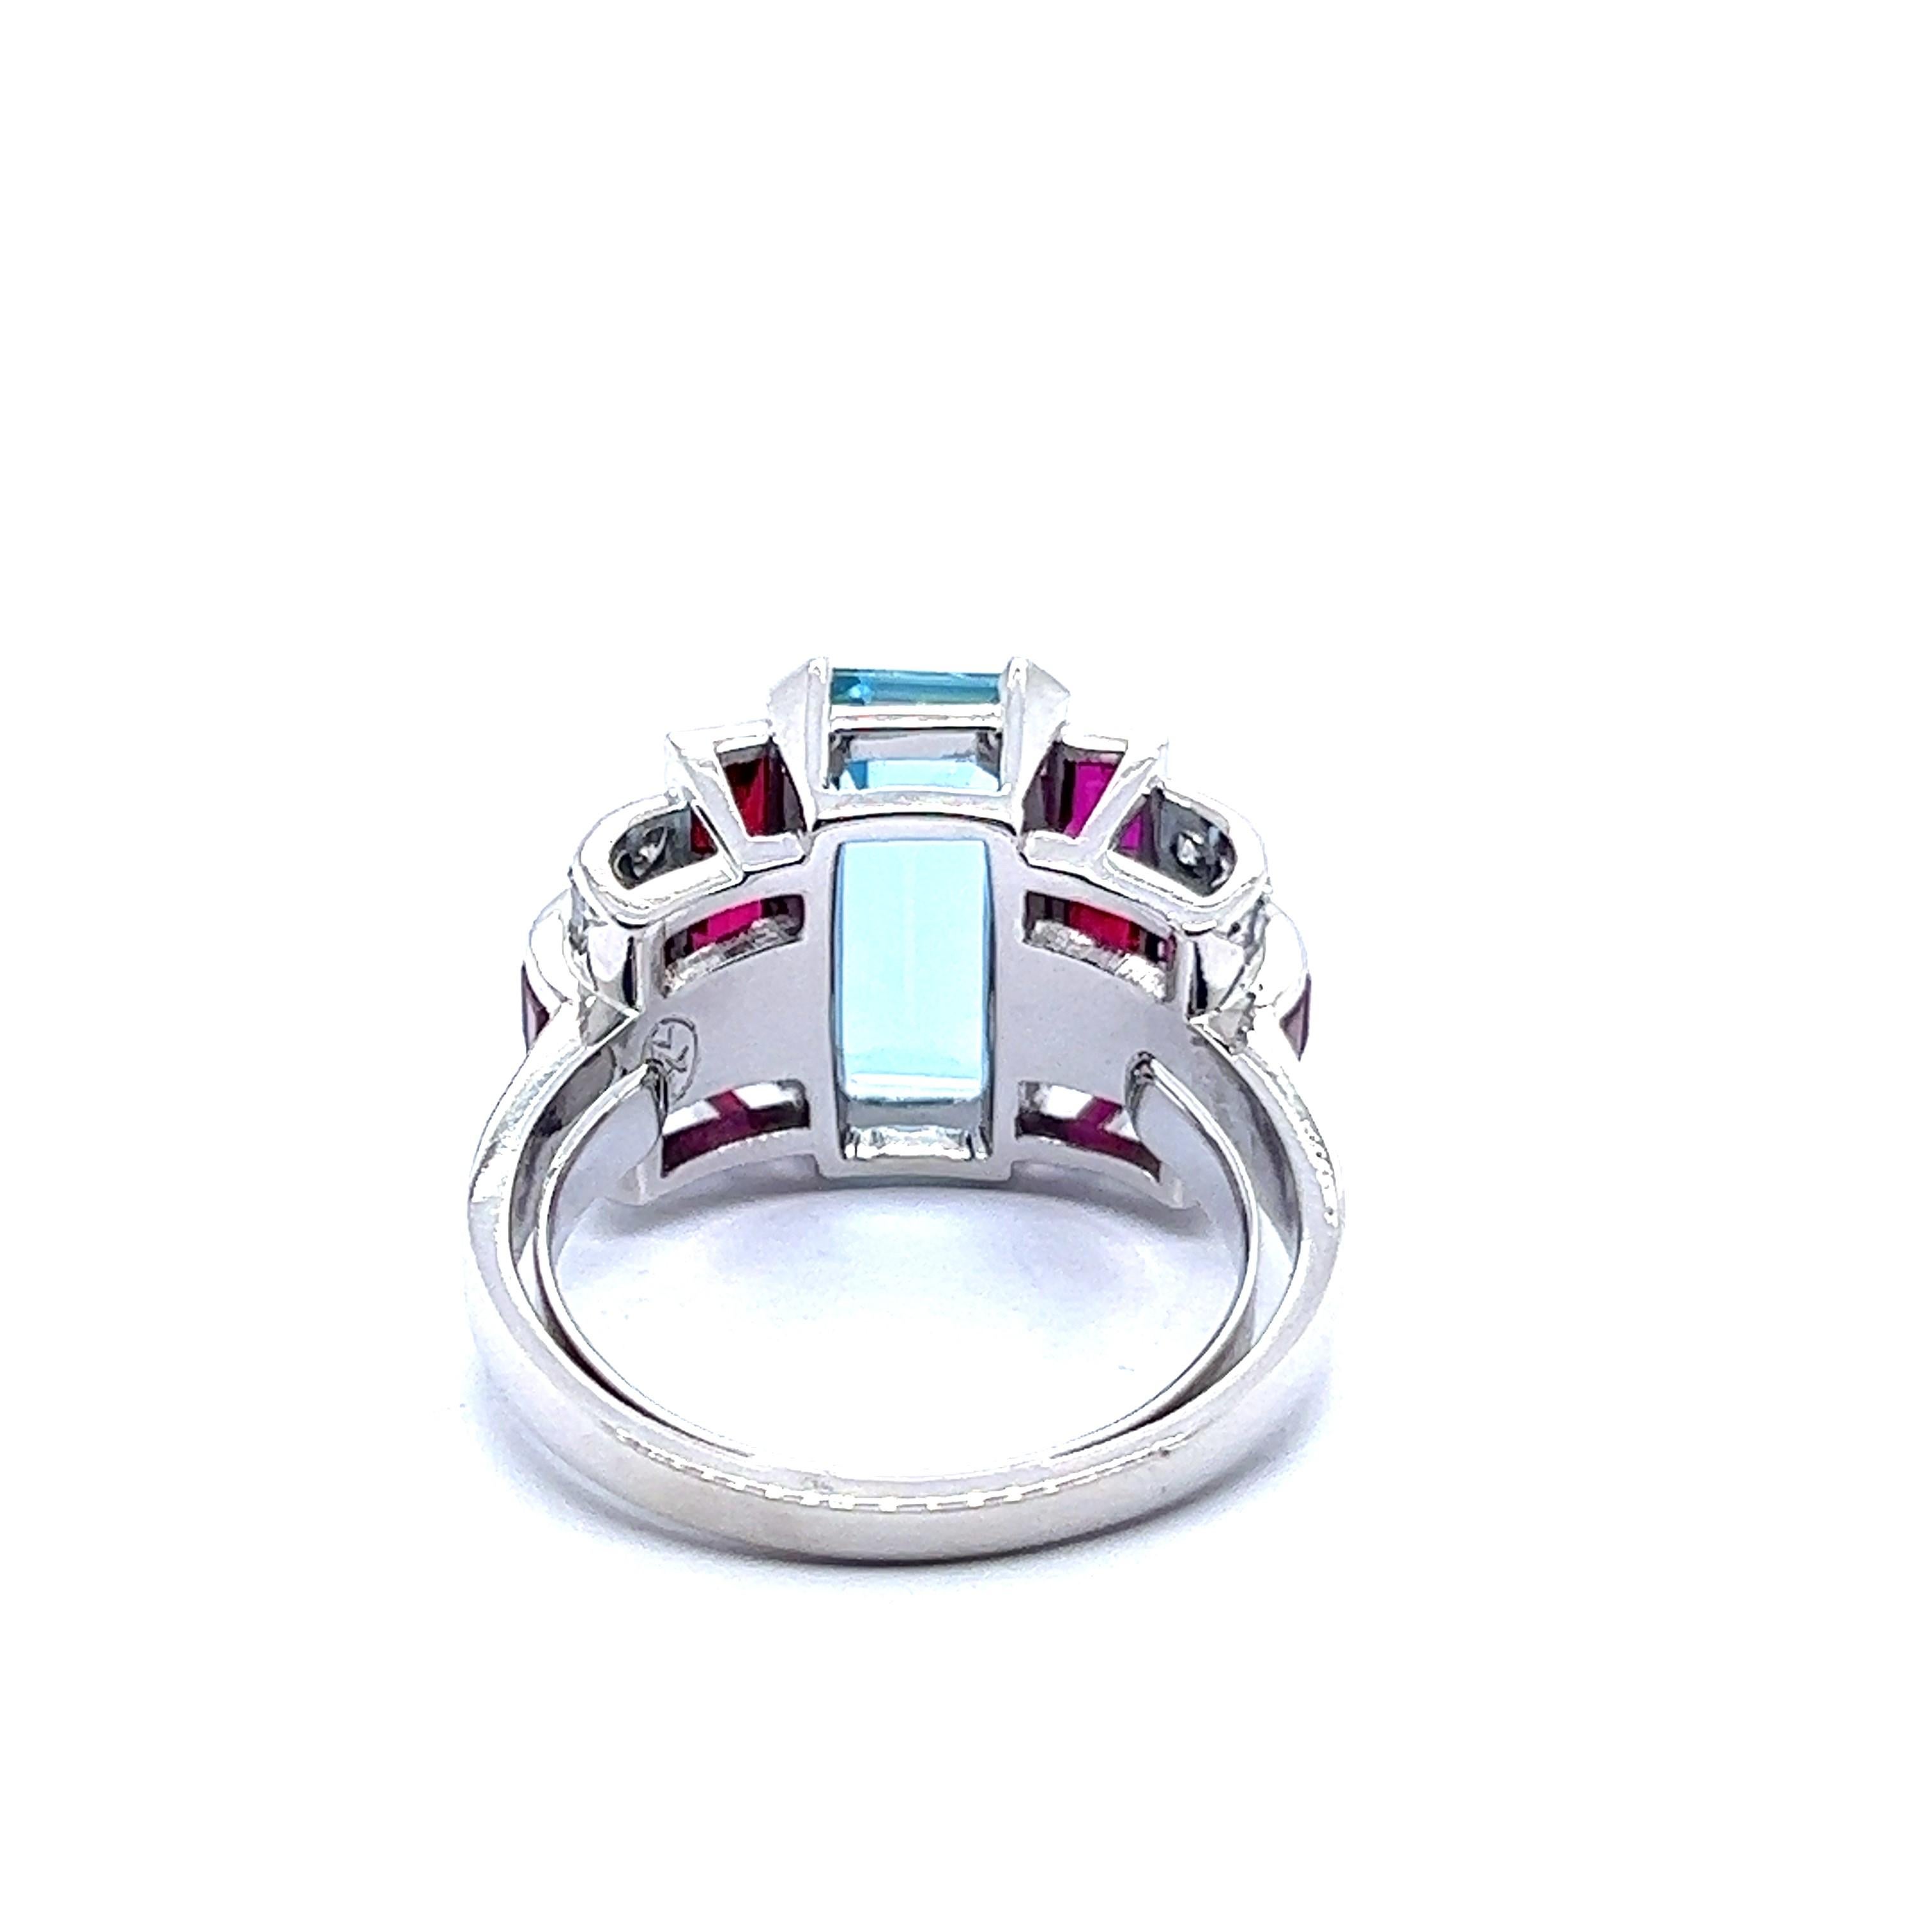 Ring with Aquamarine, Rubies & Diamonds in 18 Karat White Gold by Gübelin 2